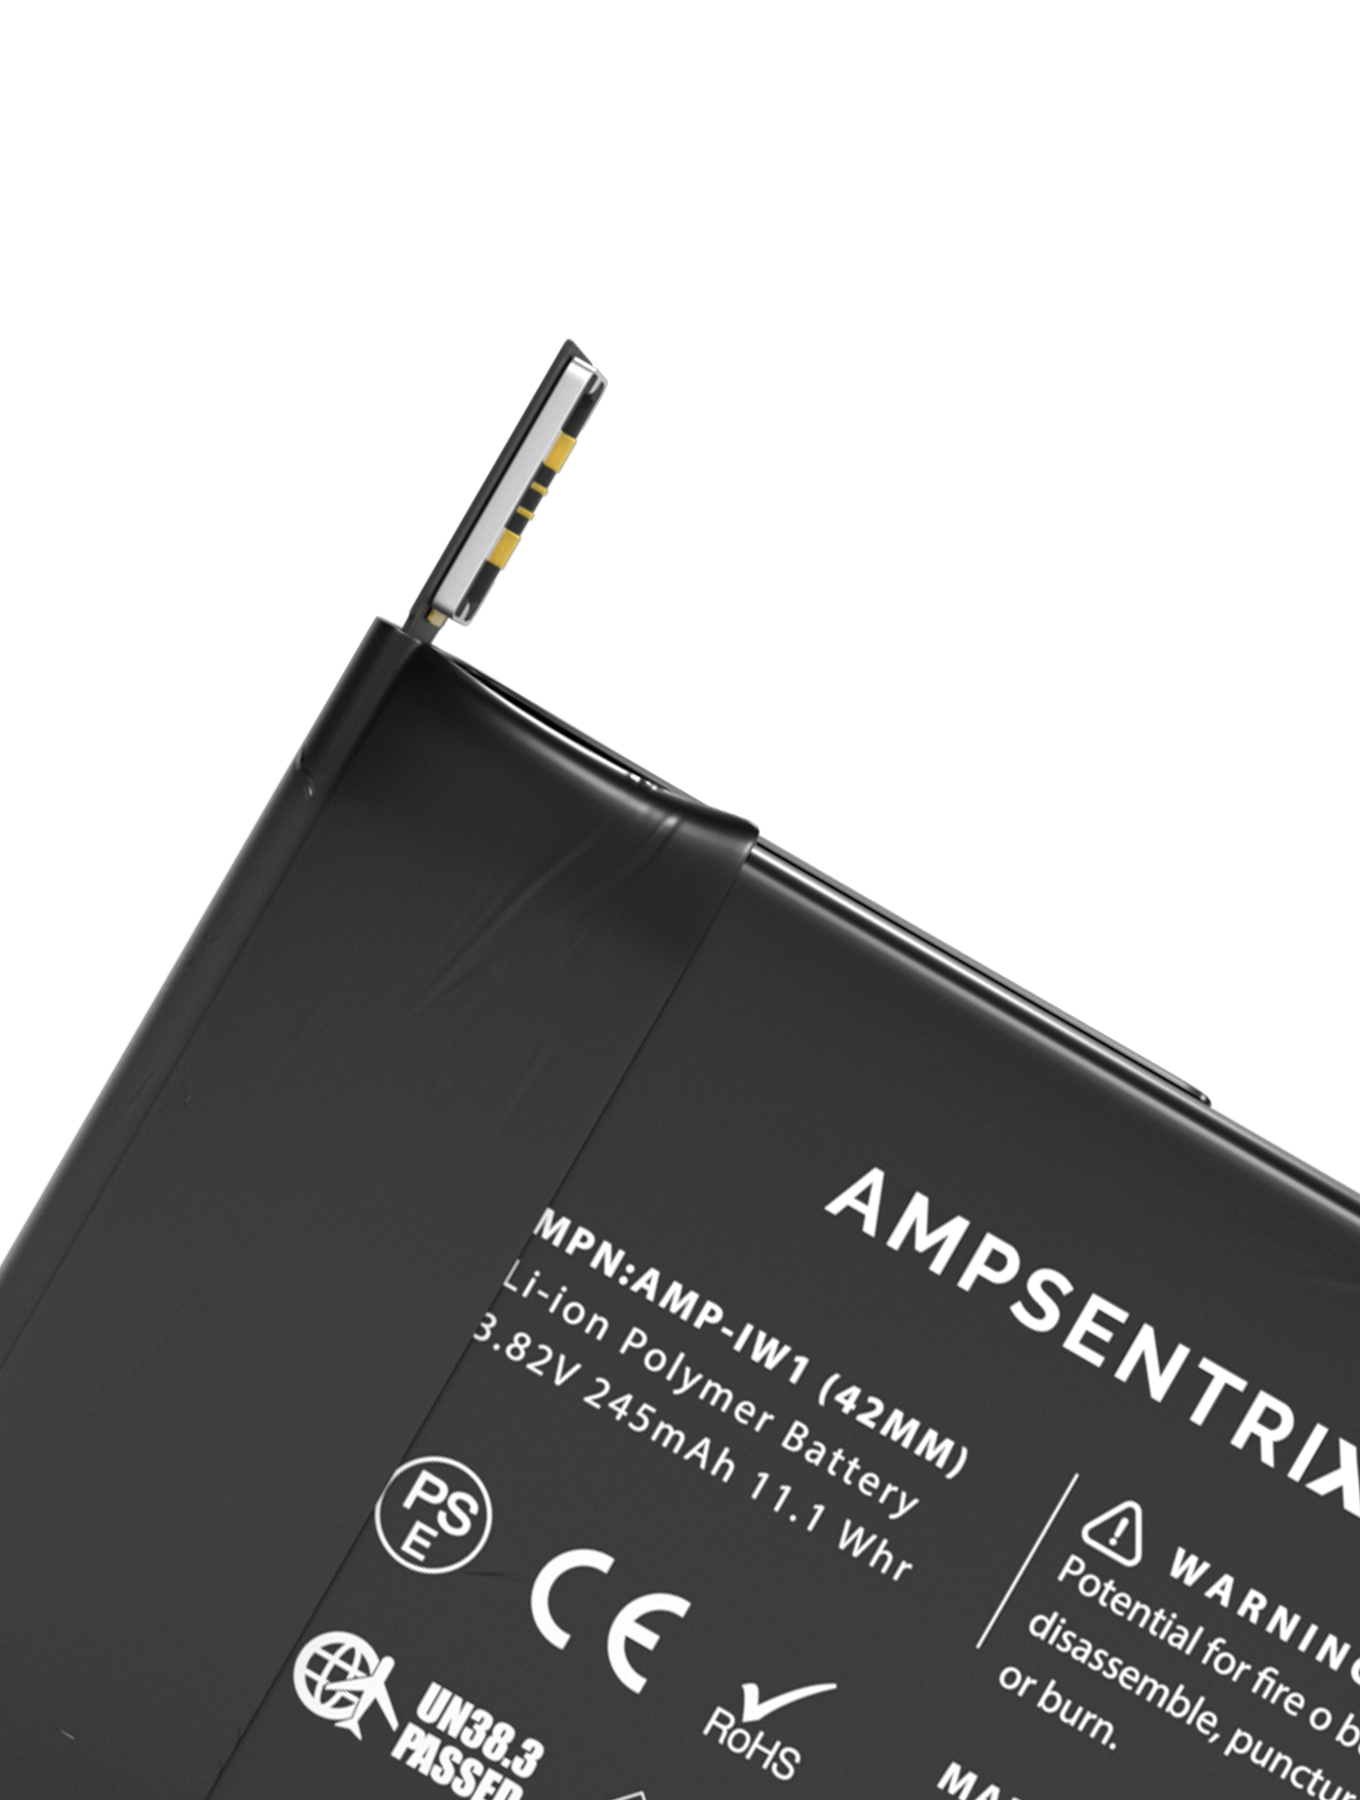 Bateria Ampsentrix Series 1 (42MM)